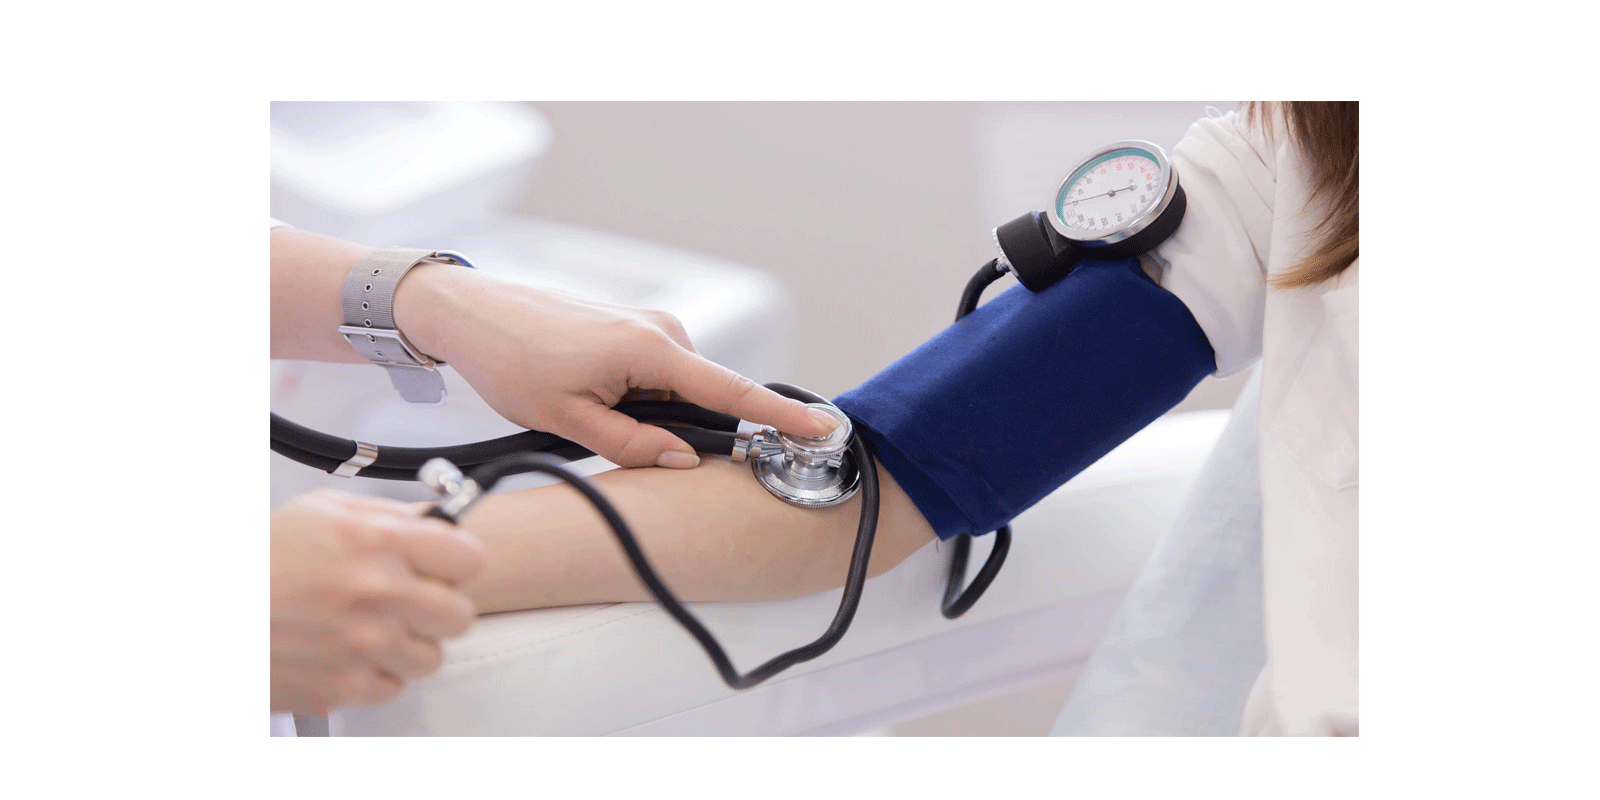 The Blood Pressure Program